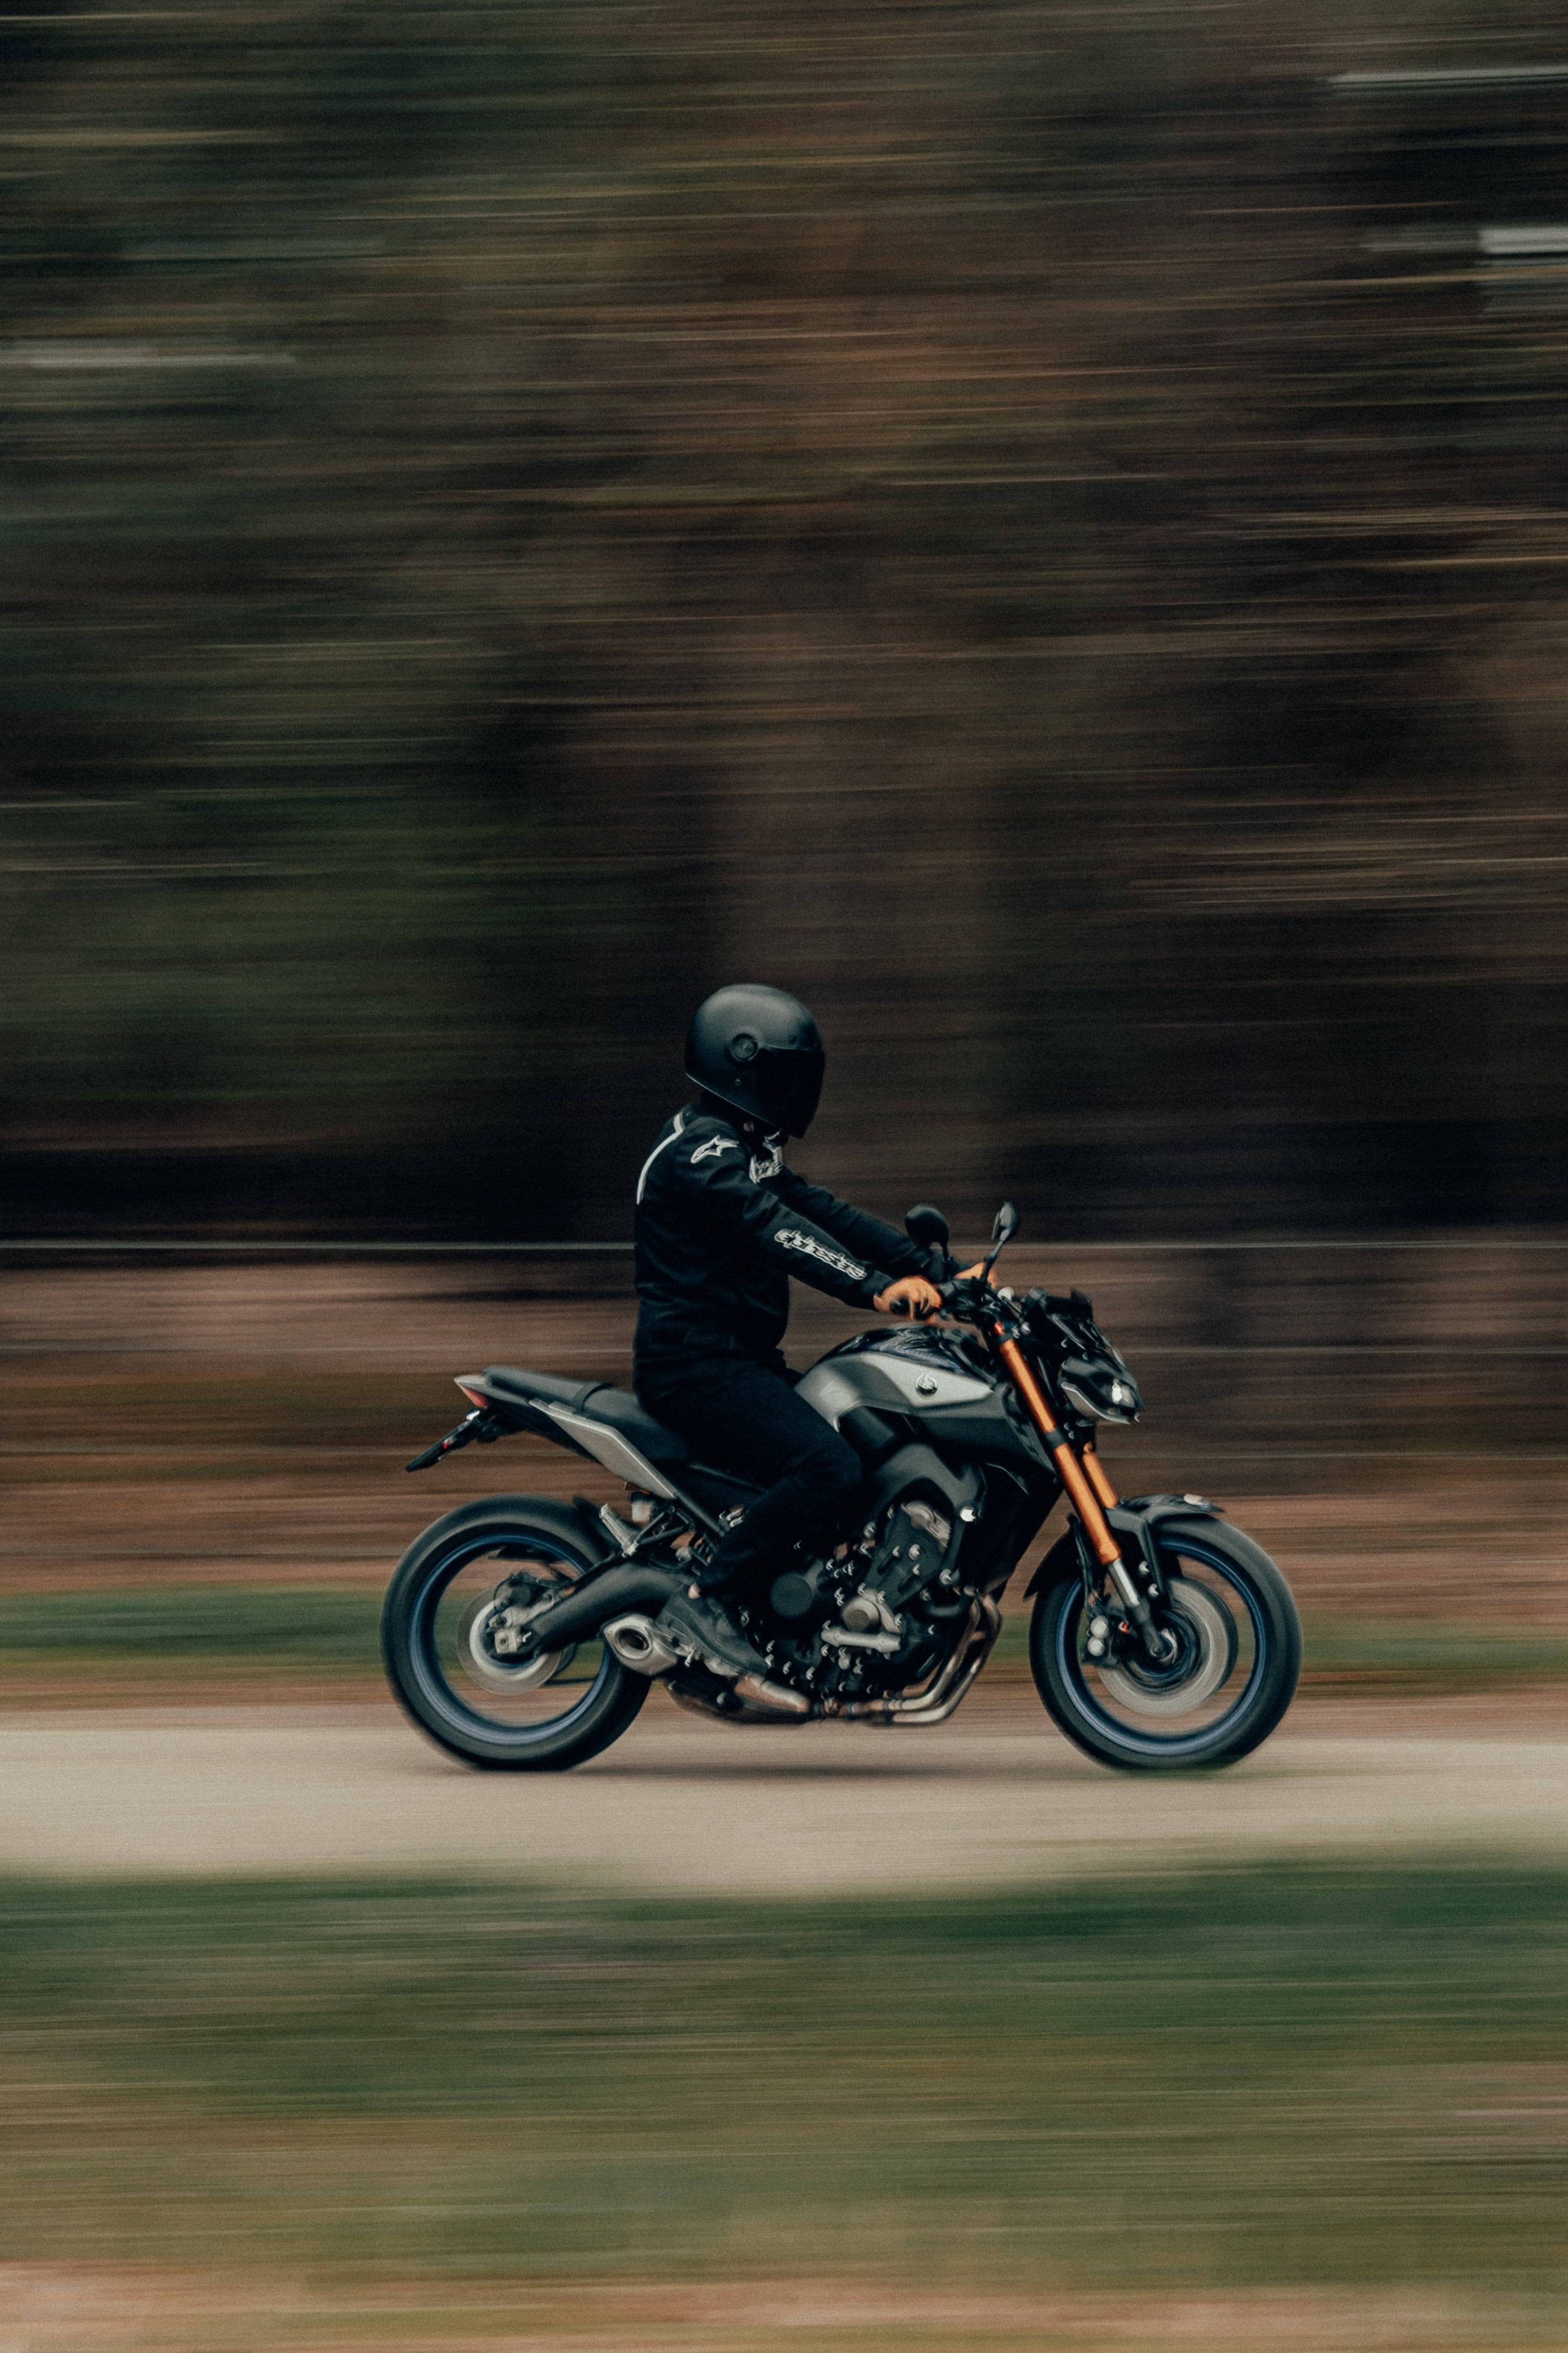 Matte Black Motorcycle Speed Iphone Wallpaper